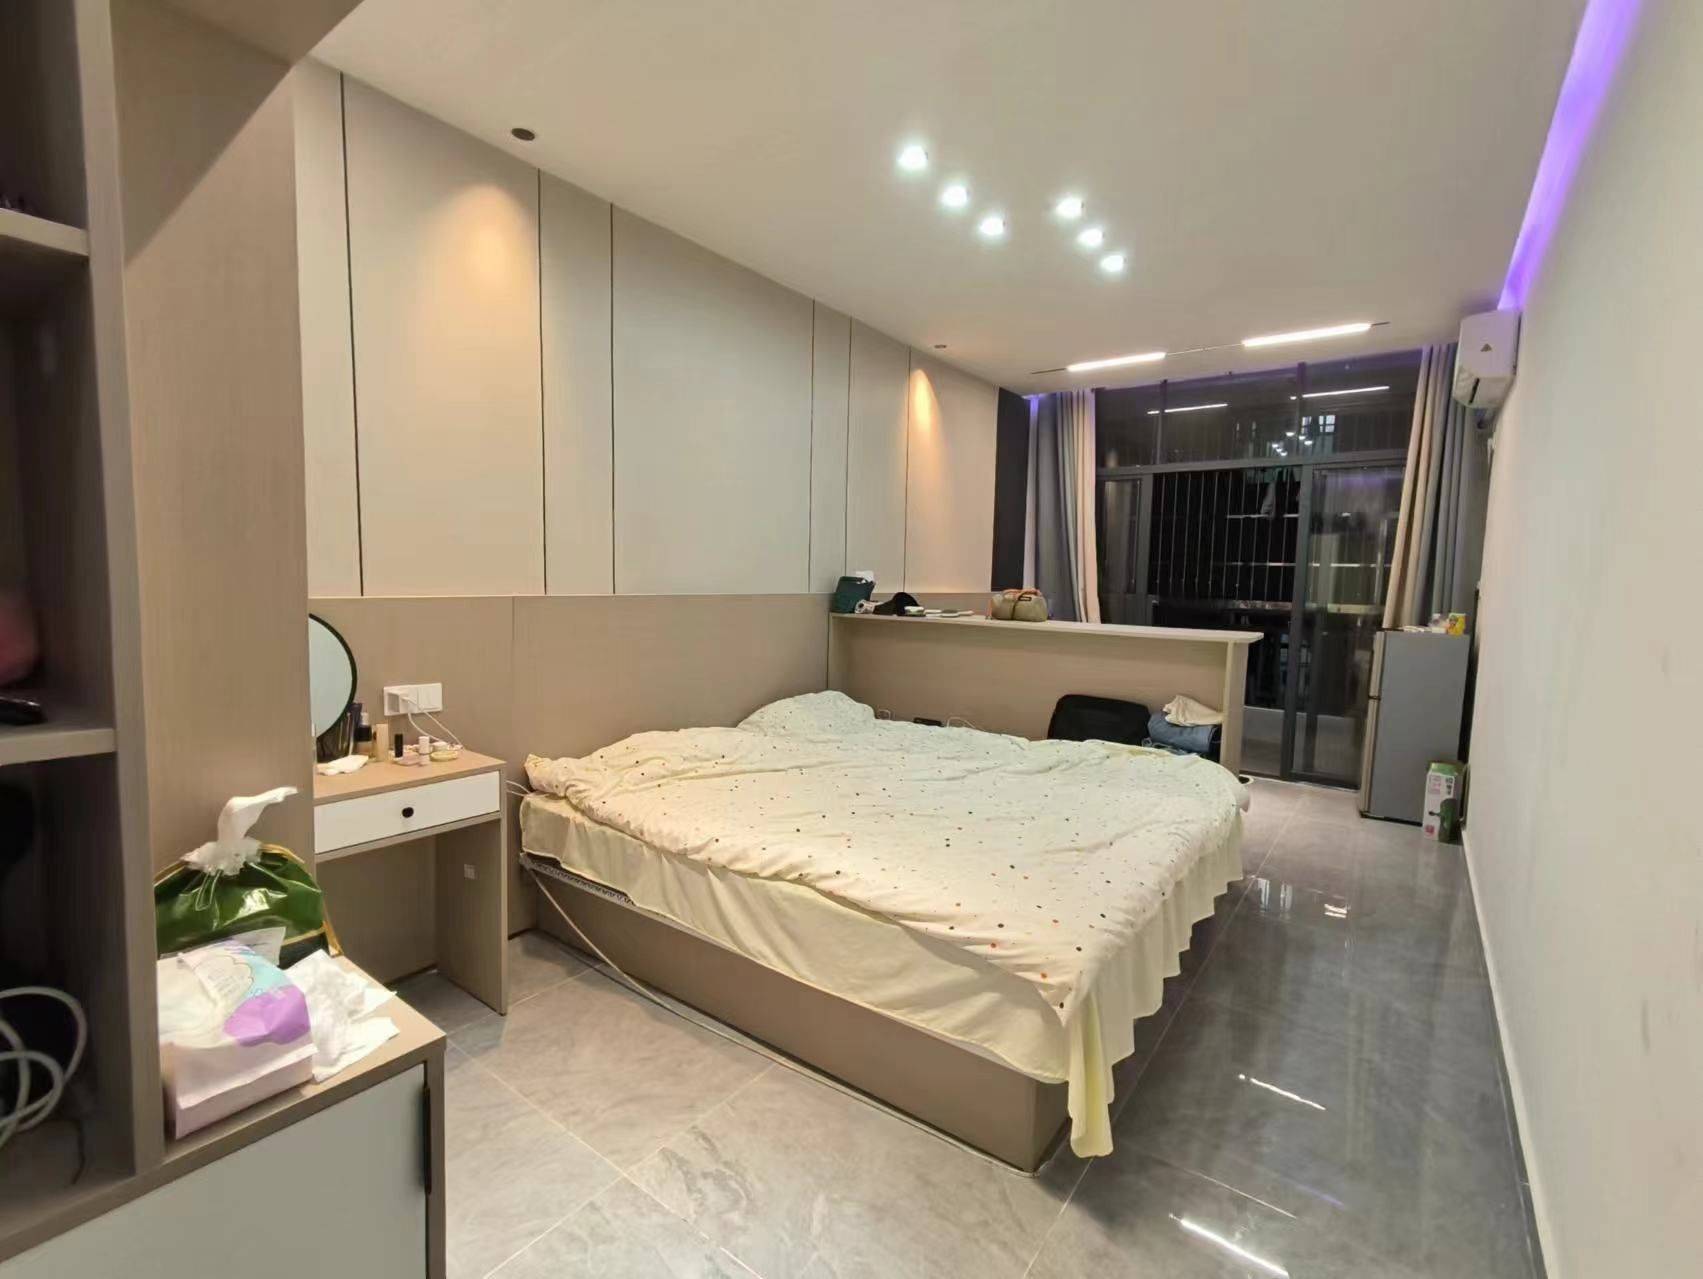 Dongguan-Dalang-Cozy Home,Clean&Comfy,No Gender Limit,Hustle & Bustle